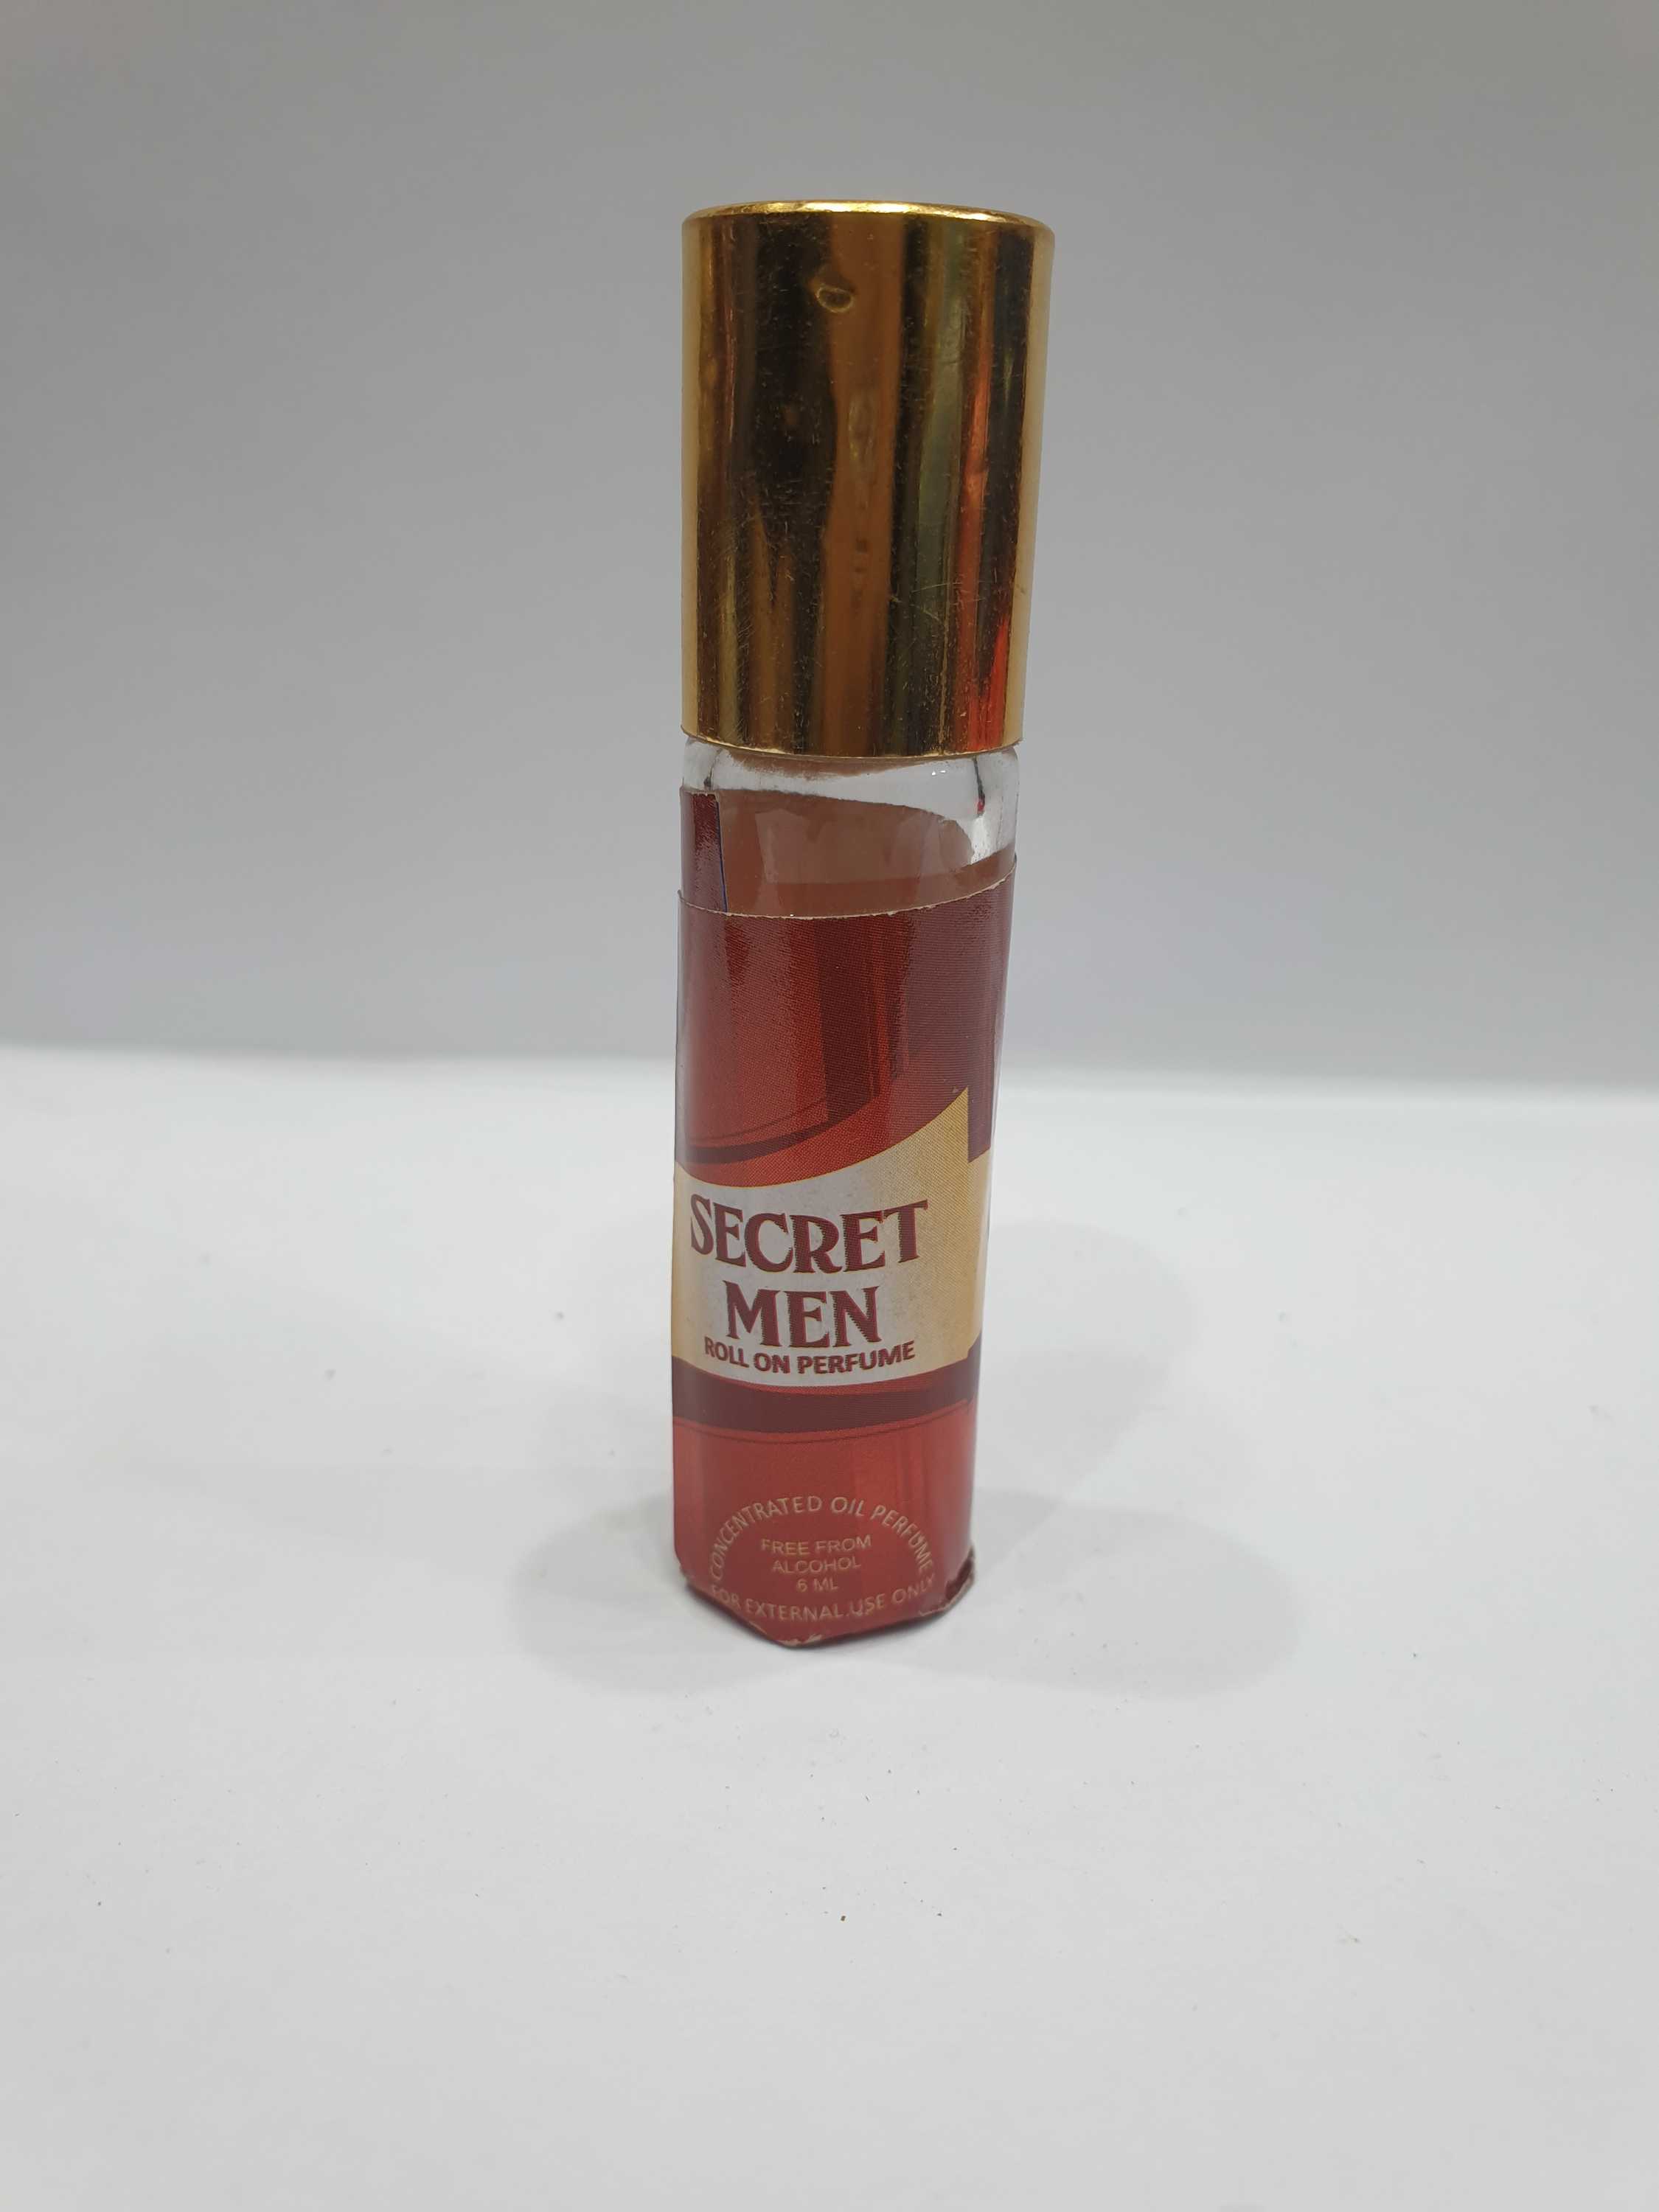 Attar - Handmade Natural Perfume Form Herbal Extract, secret Men, 6ml, roll On